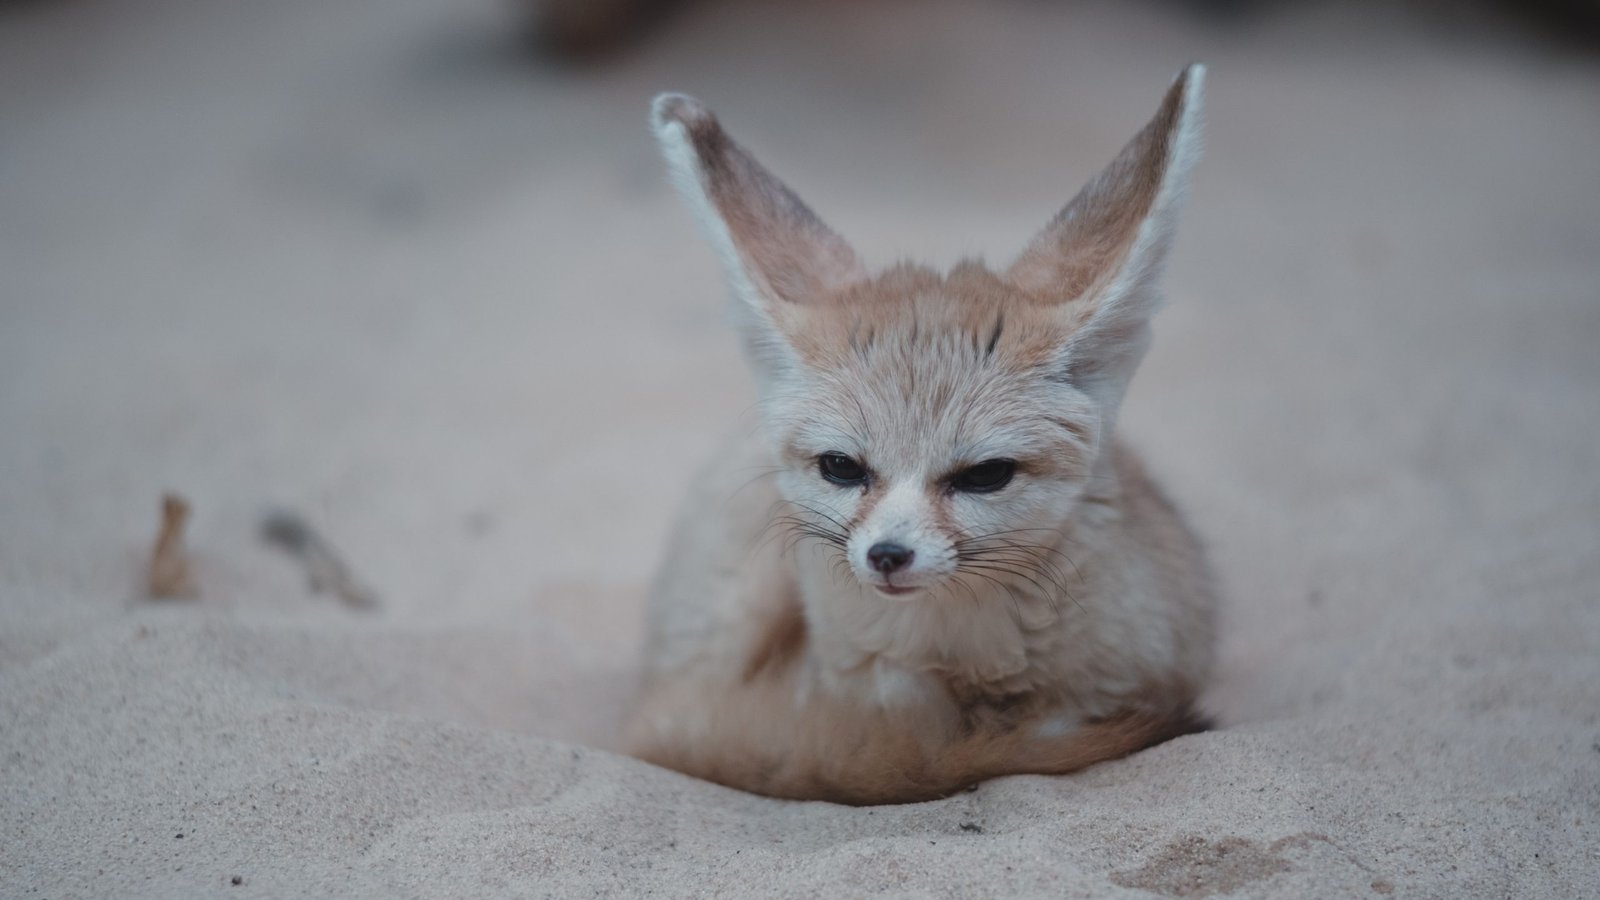 Photo of kit fox sitting in sand